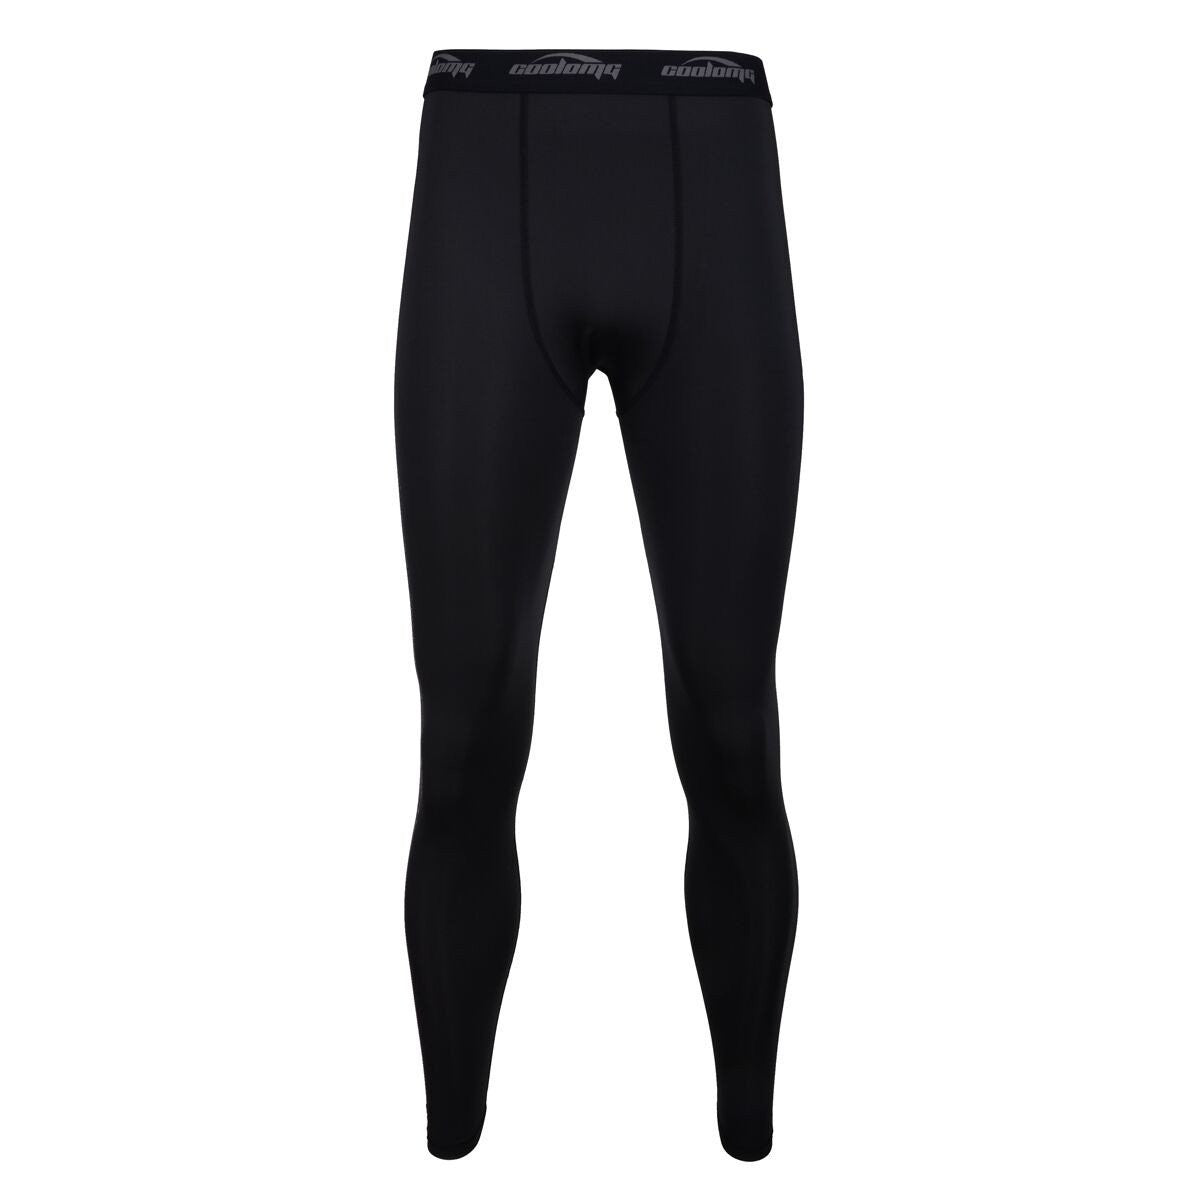 COOLOMG Compression Pants GYM Running Tights Length Pants Leggings For Men  Youth Boy BLACK – COOLOMG - Football Baseball Basketball Gears